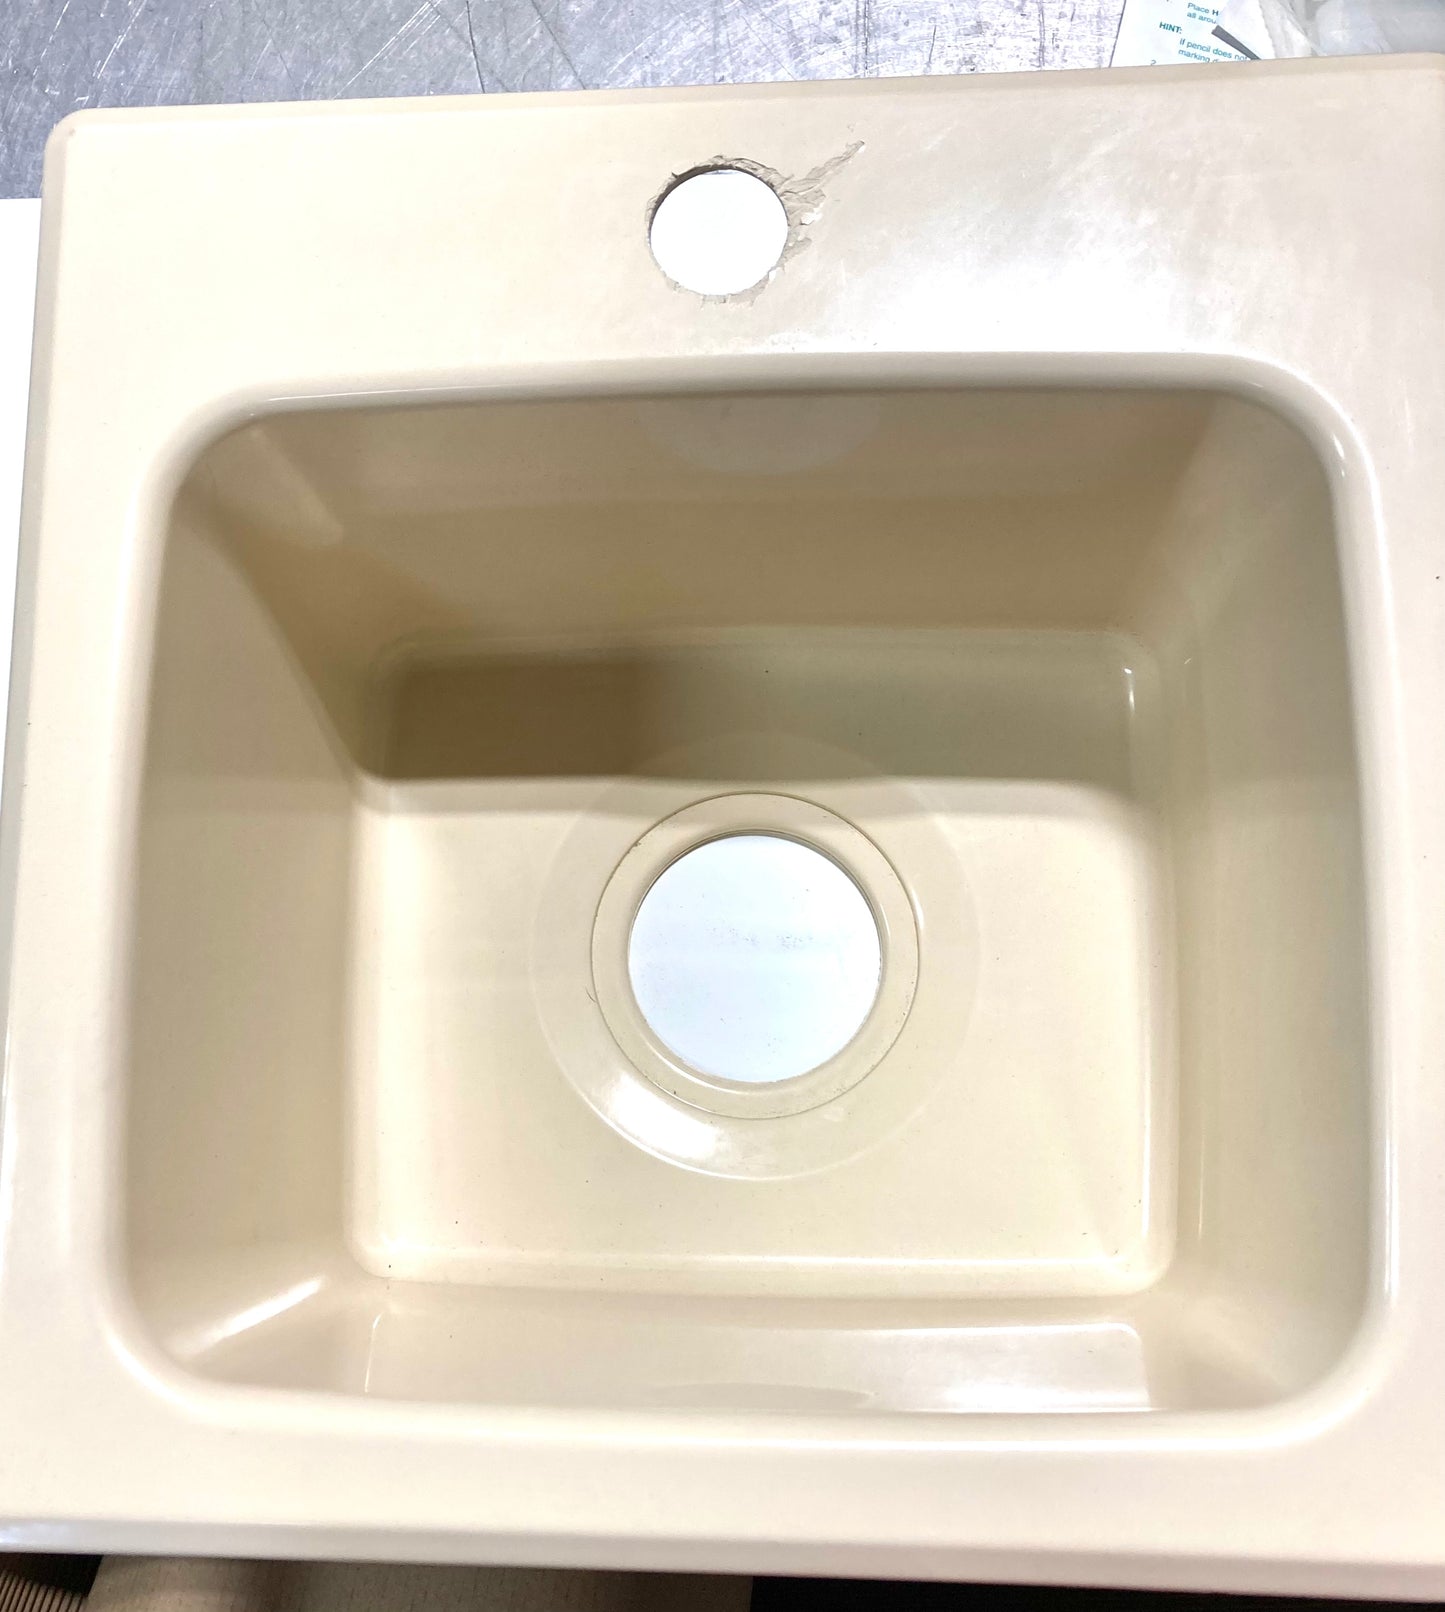 Clearance kitchen/bathroom sinks